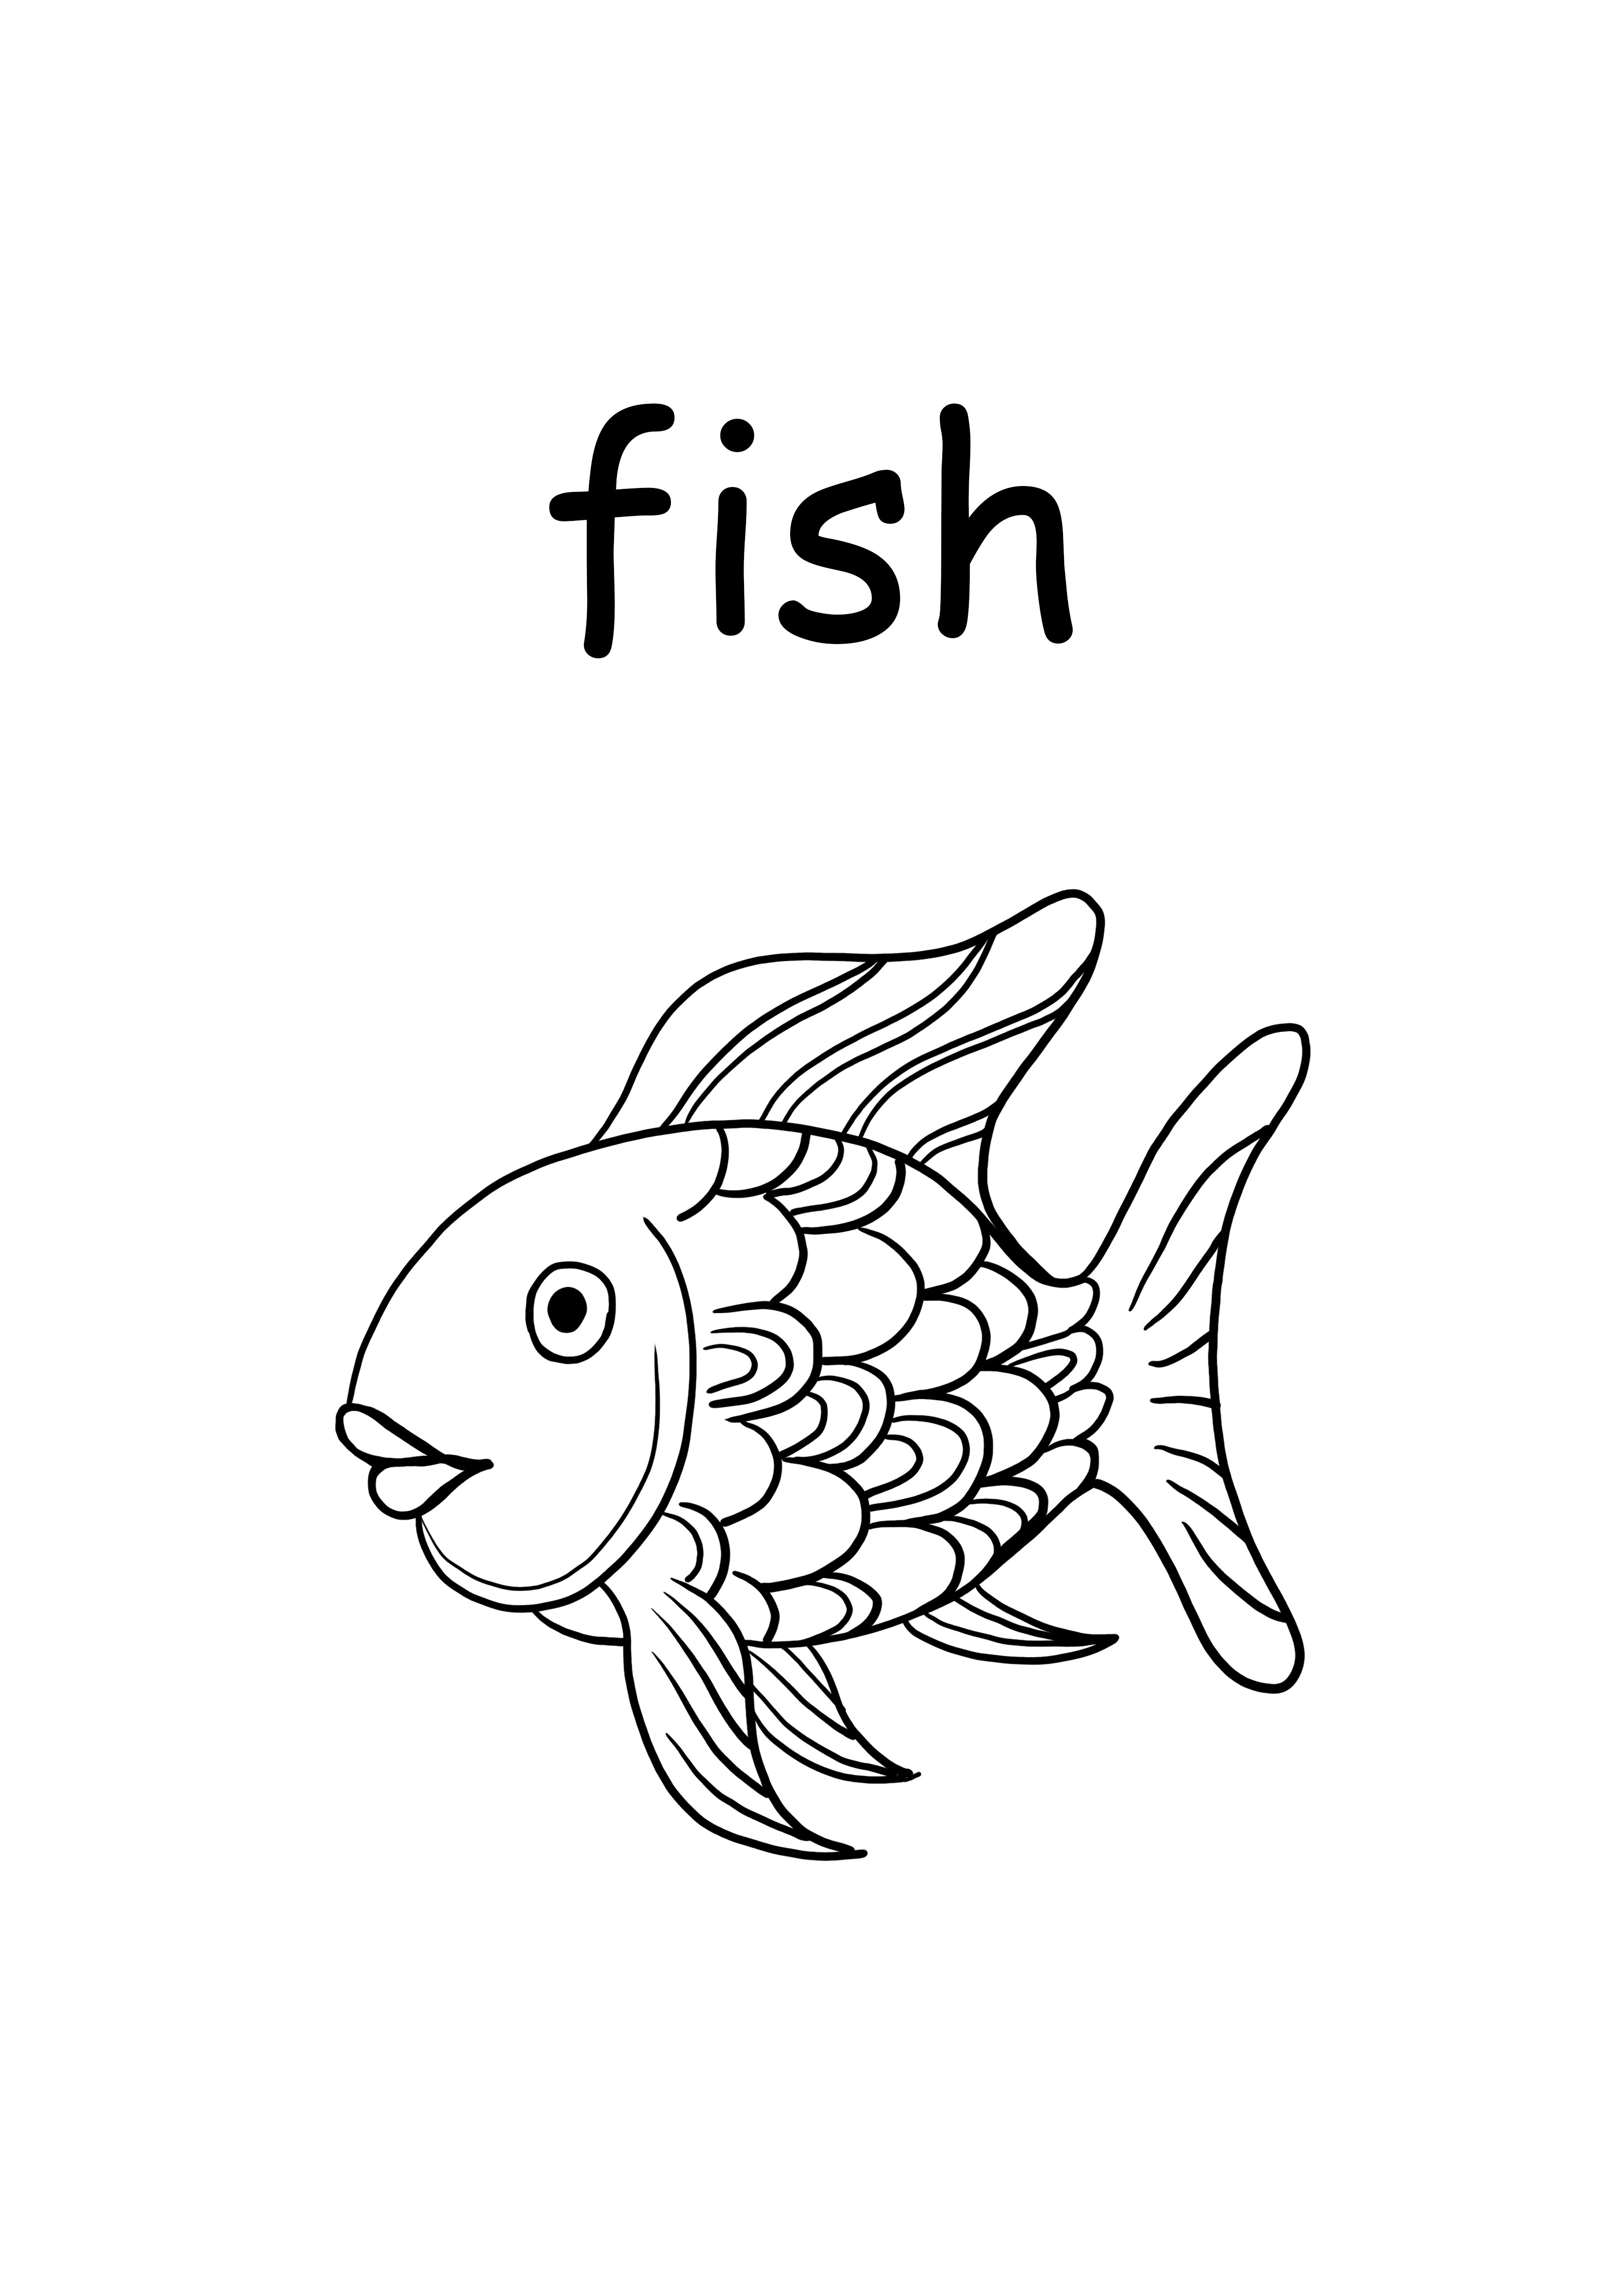 f para peixe palavra minúscula para imprimir e colorir gratuitamente